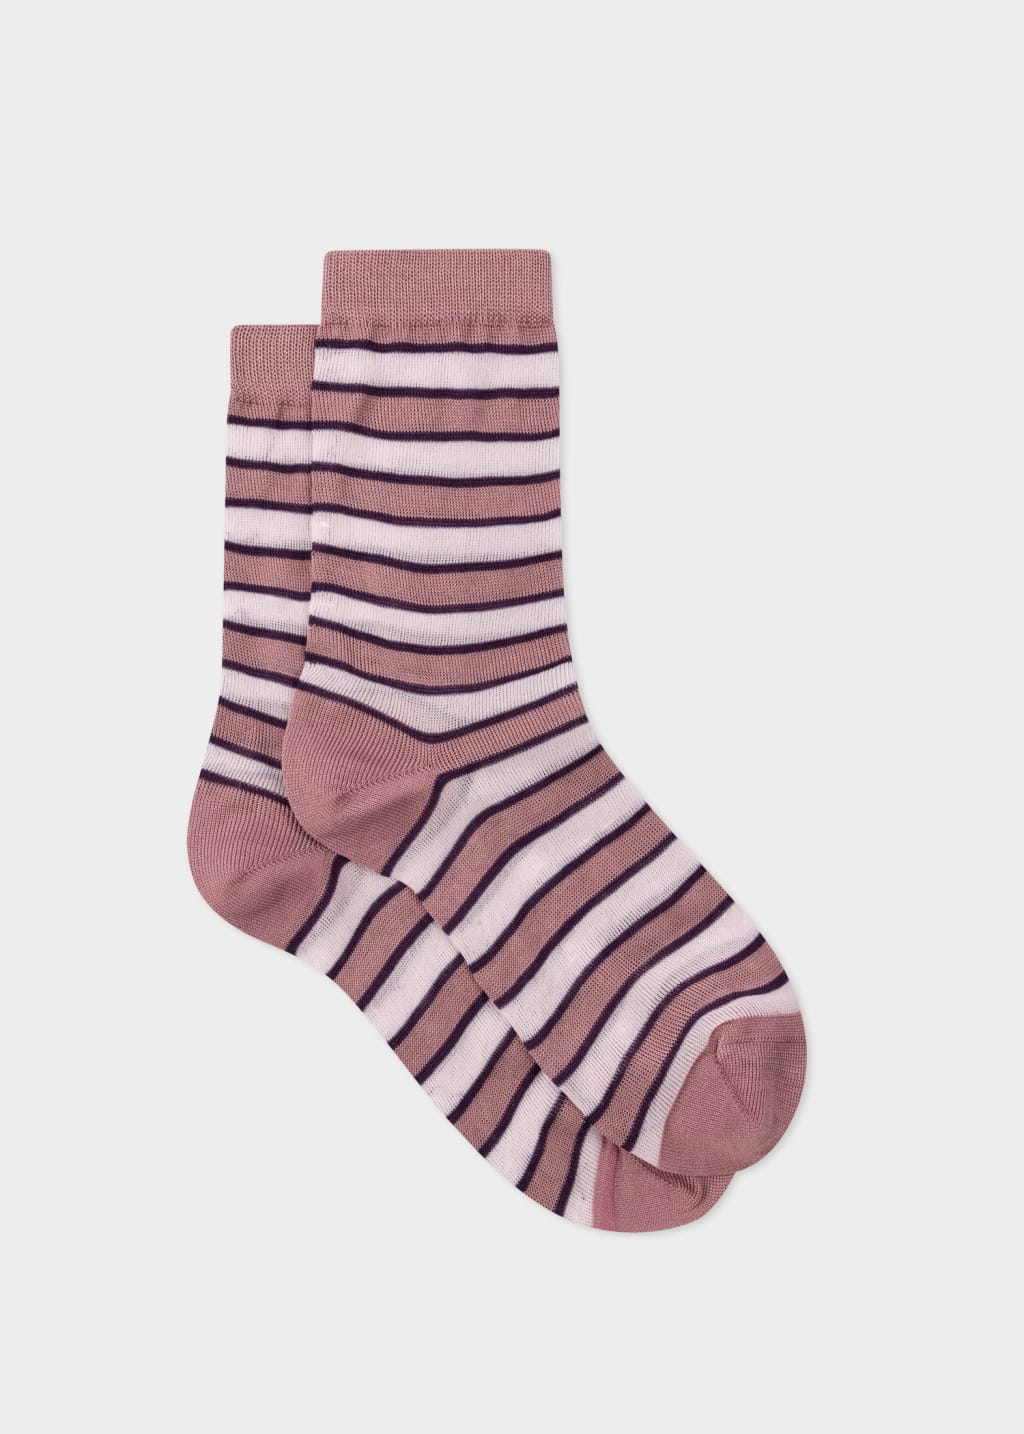 Product View - Women's Mauve Stripe Socks by Paul Smith